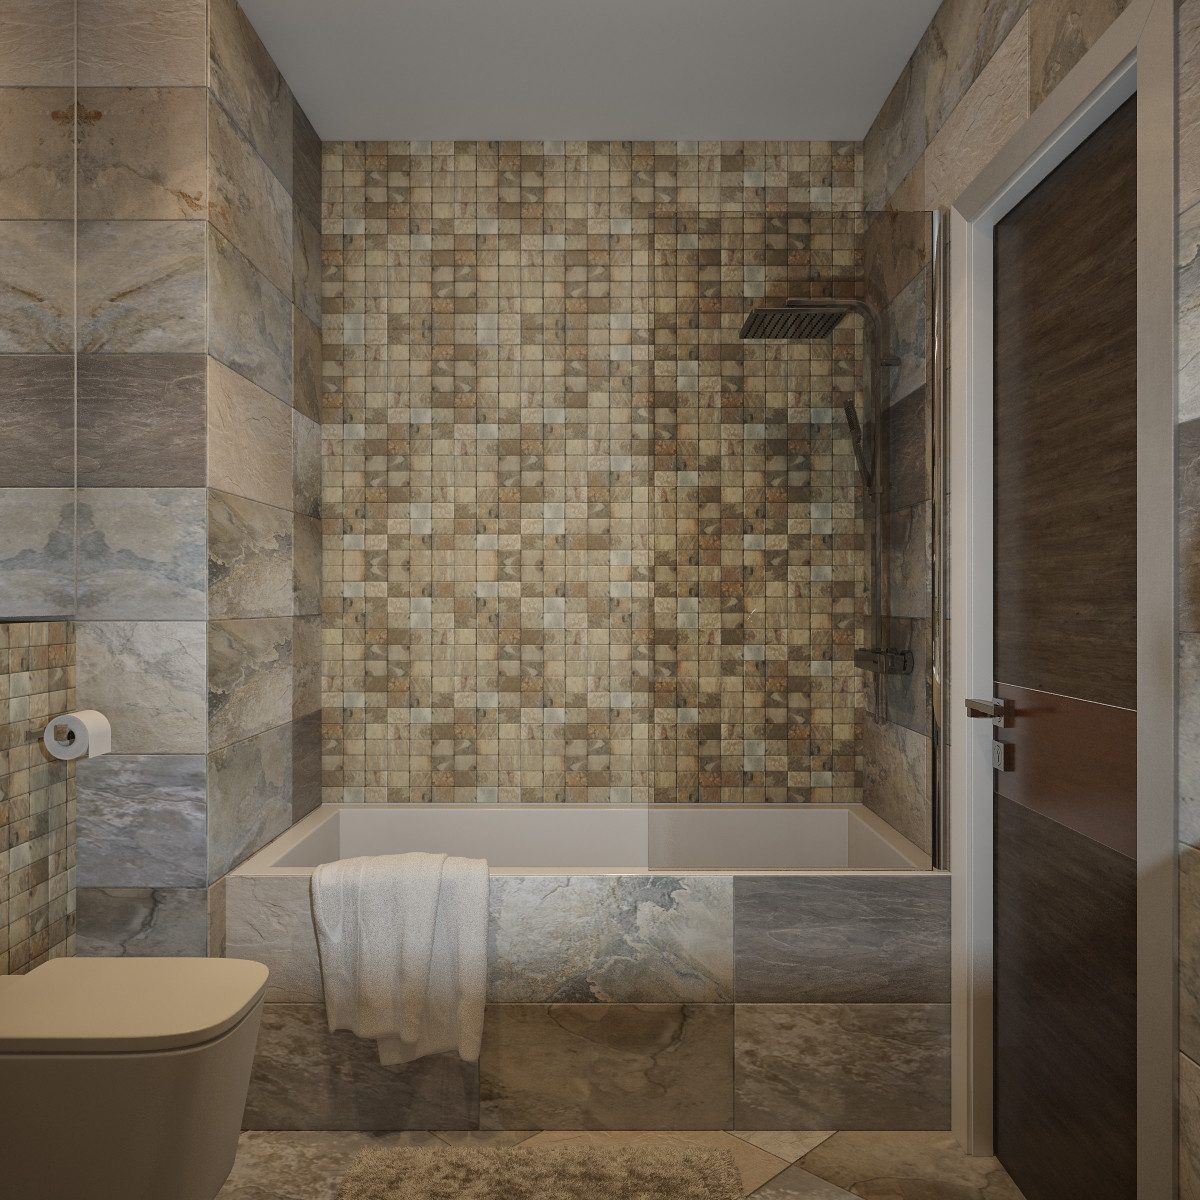 Mosaic Bathroom Tile
 Beautify Your Bathroom With Mosaics